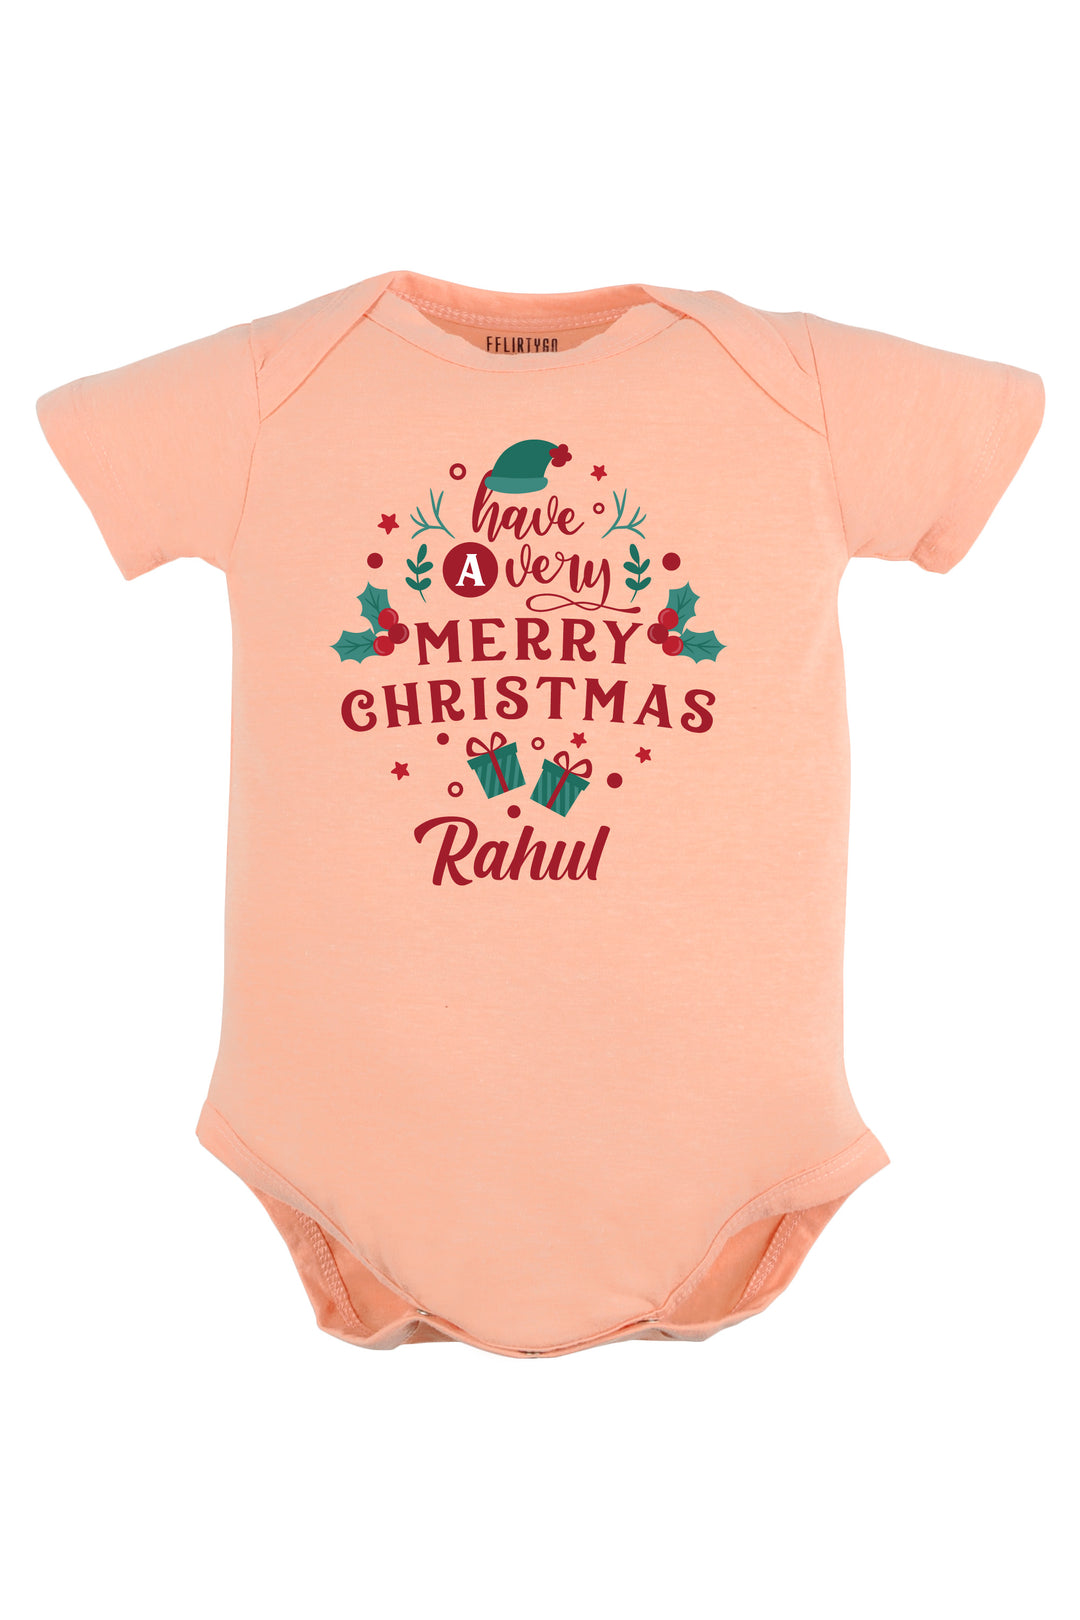 Have A Very Merry Christmas Baby Romper | Onesies w/ Custom Name